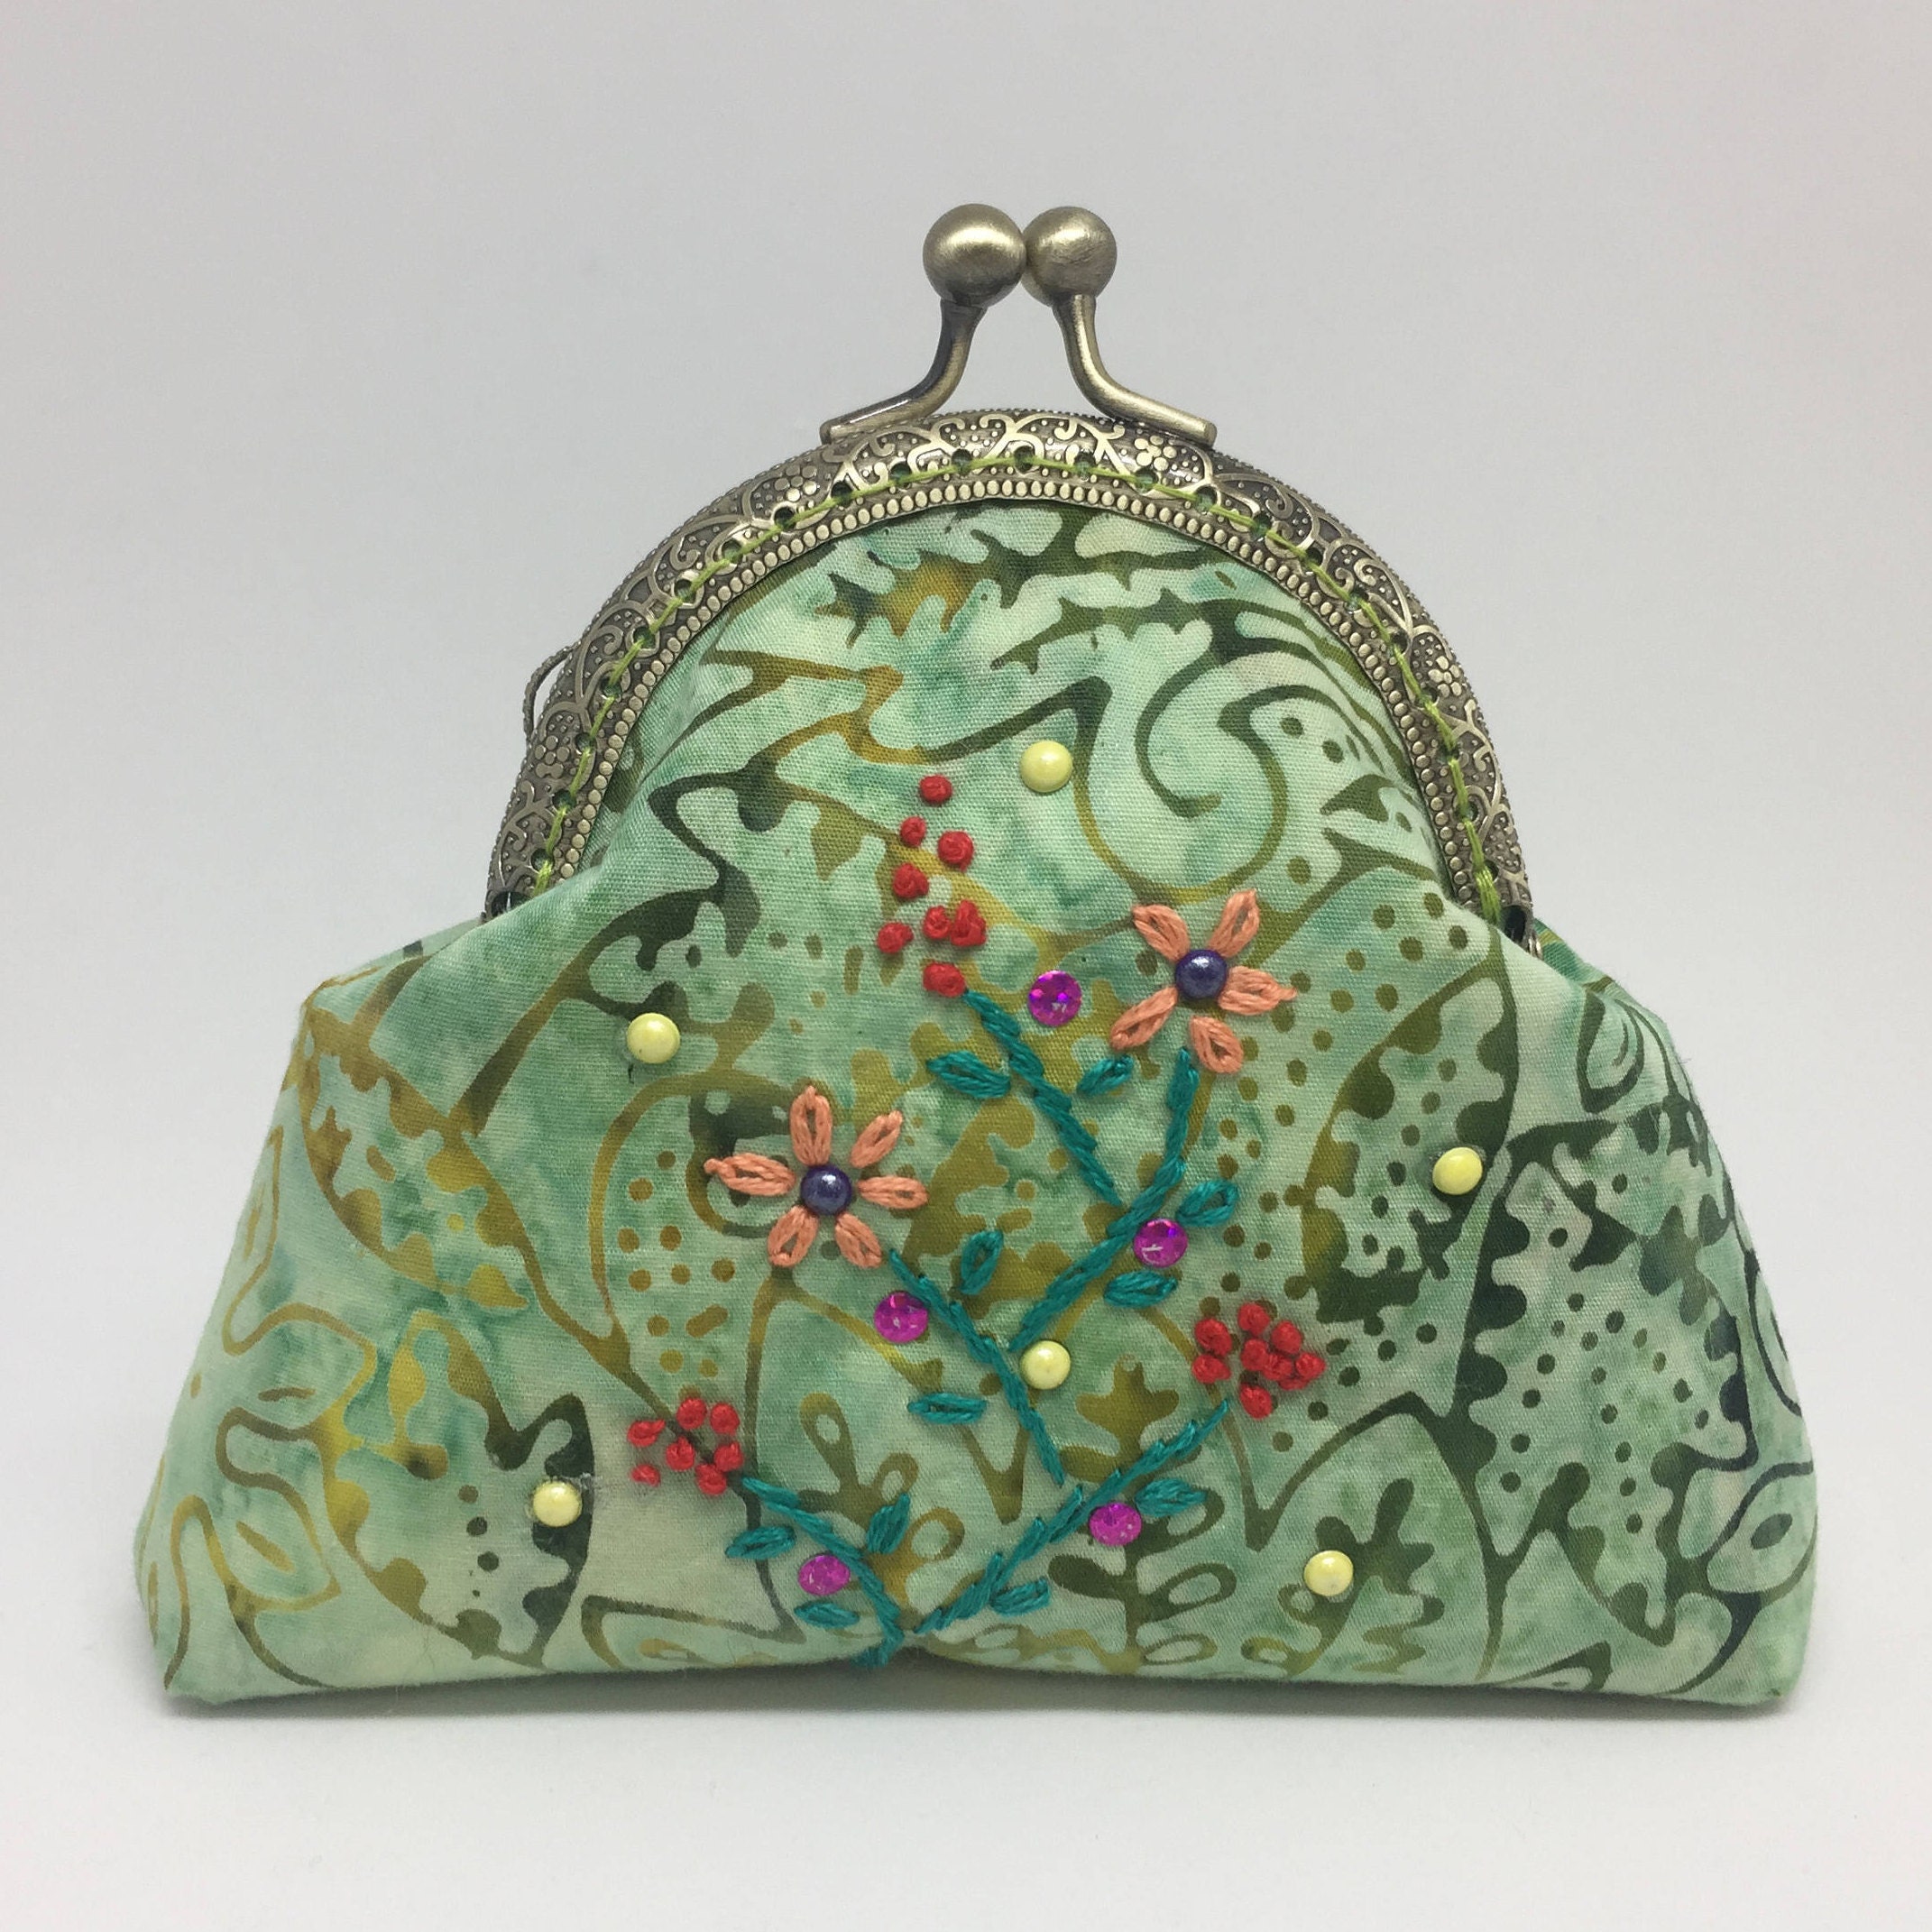 Handmade coin purse / kiss clasp coin purse / embroidered coin